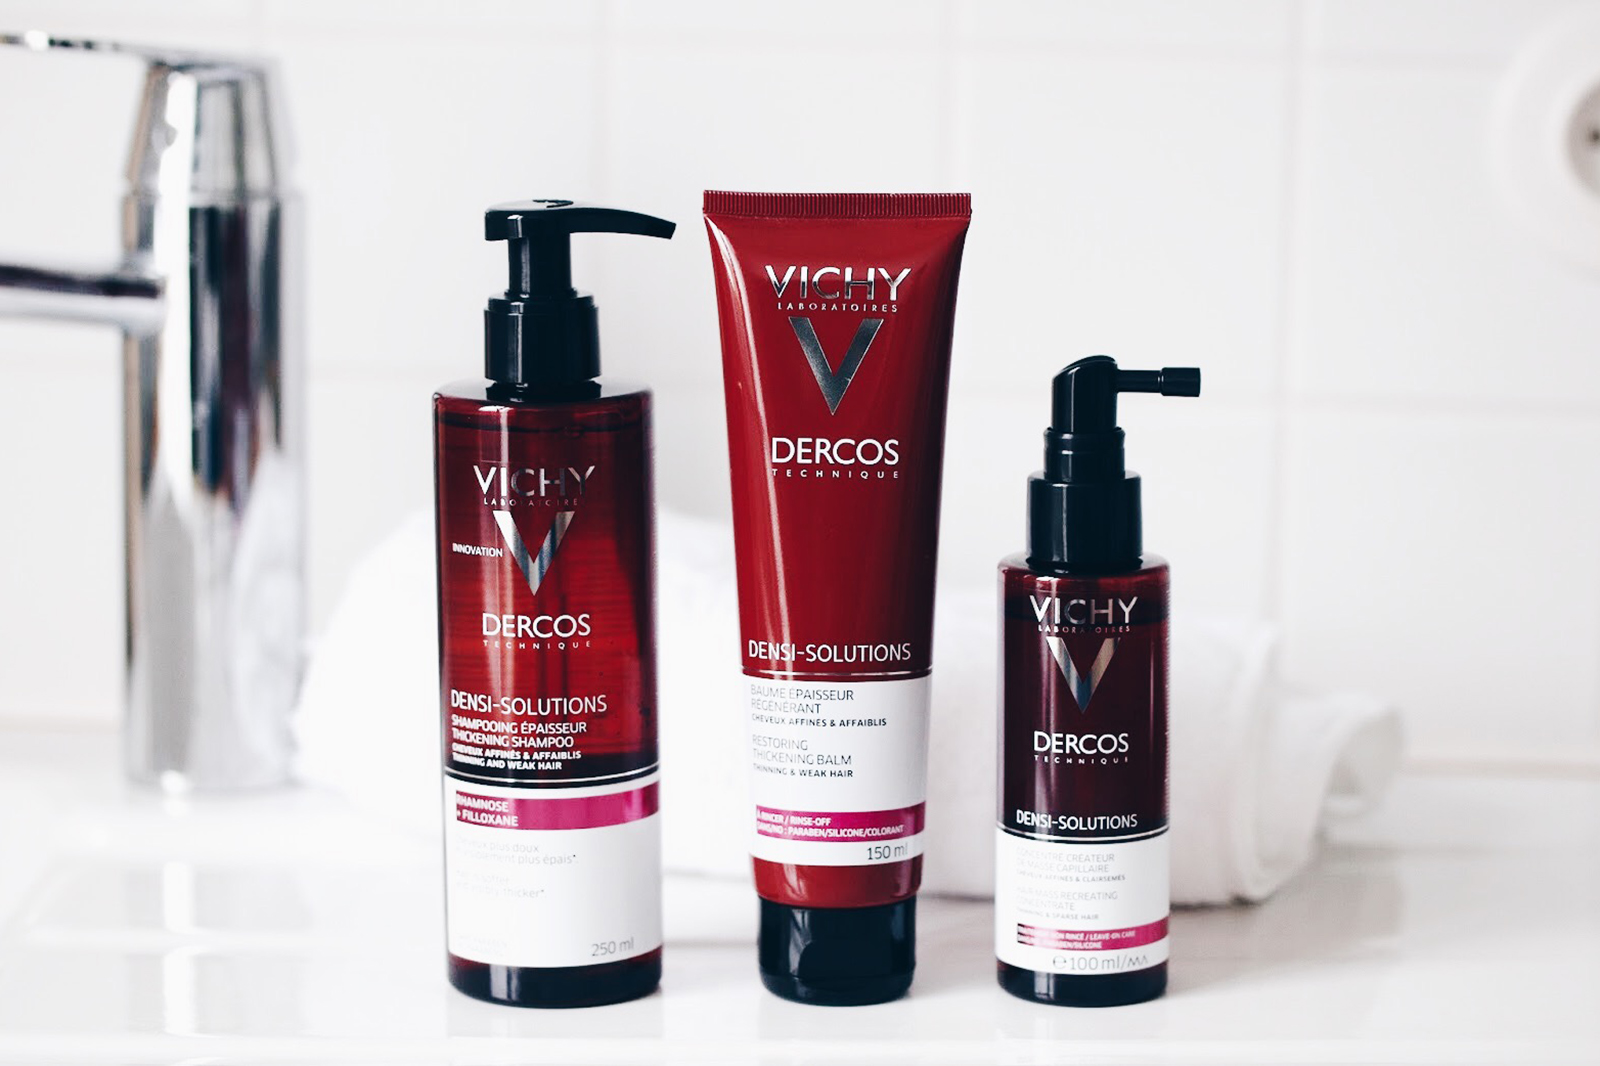 vichy dercos densi solutions shampooing baume apres shampooing spray cheveux plus dense avis test